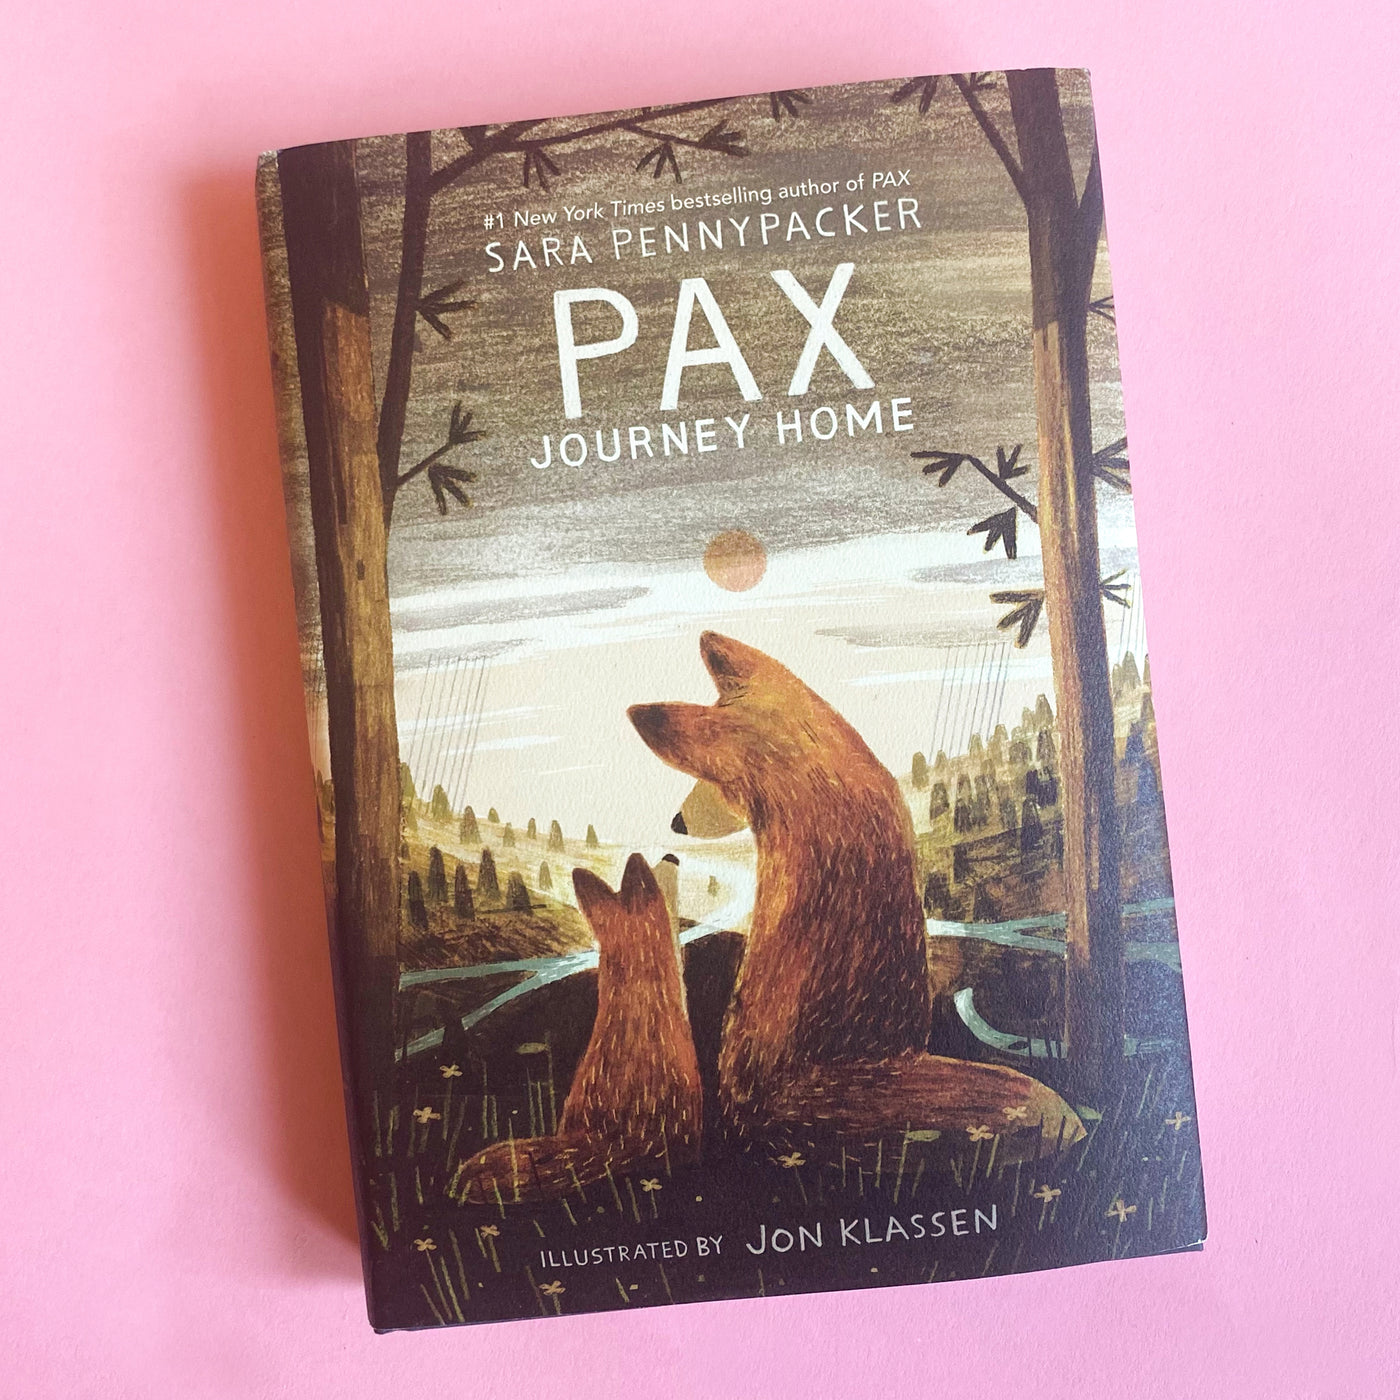 Pax, Journey Home by Sara Pennypacker and Jon Klassen